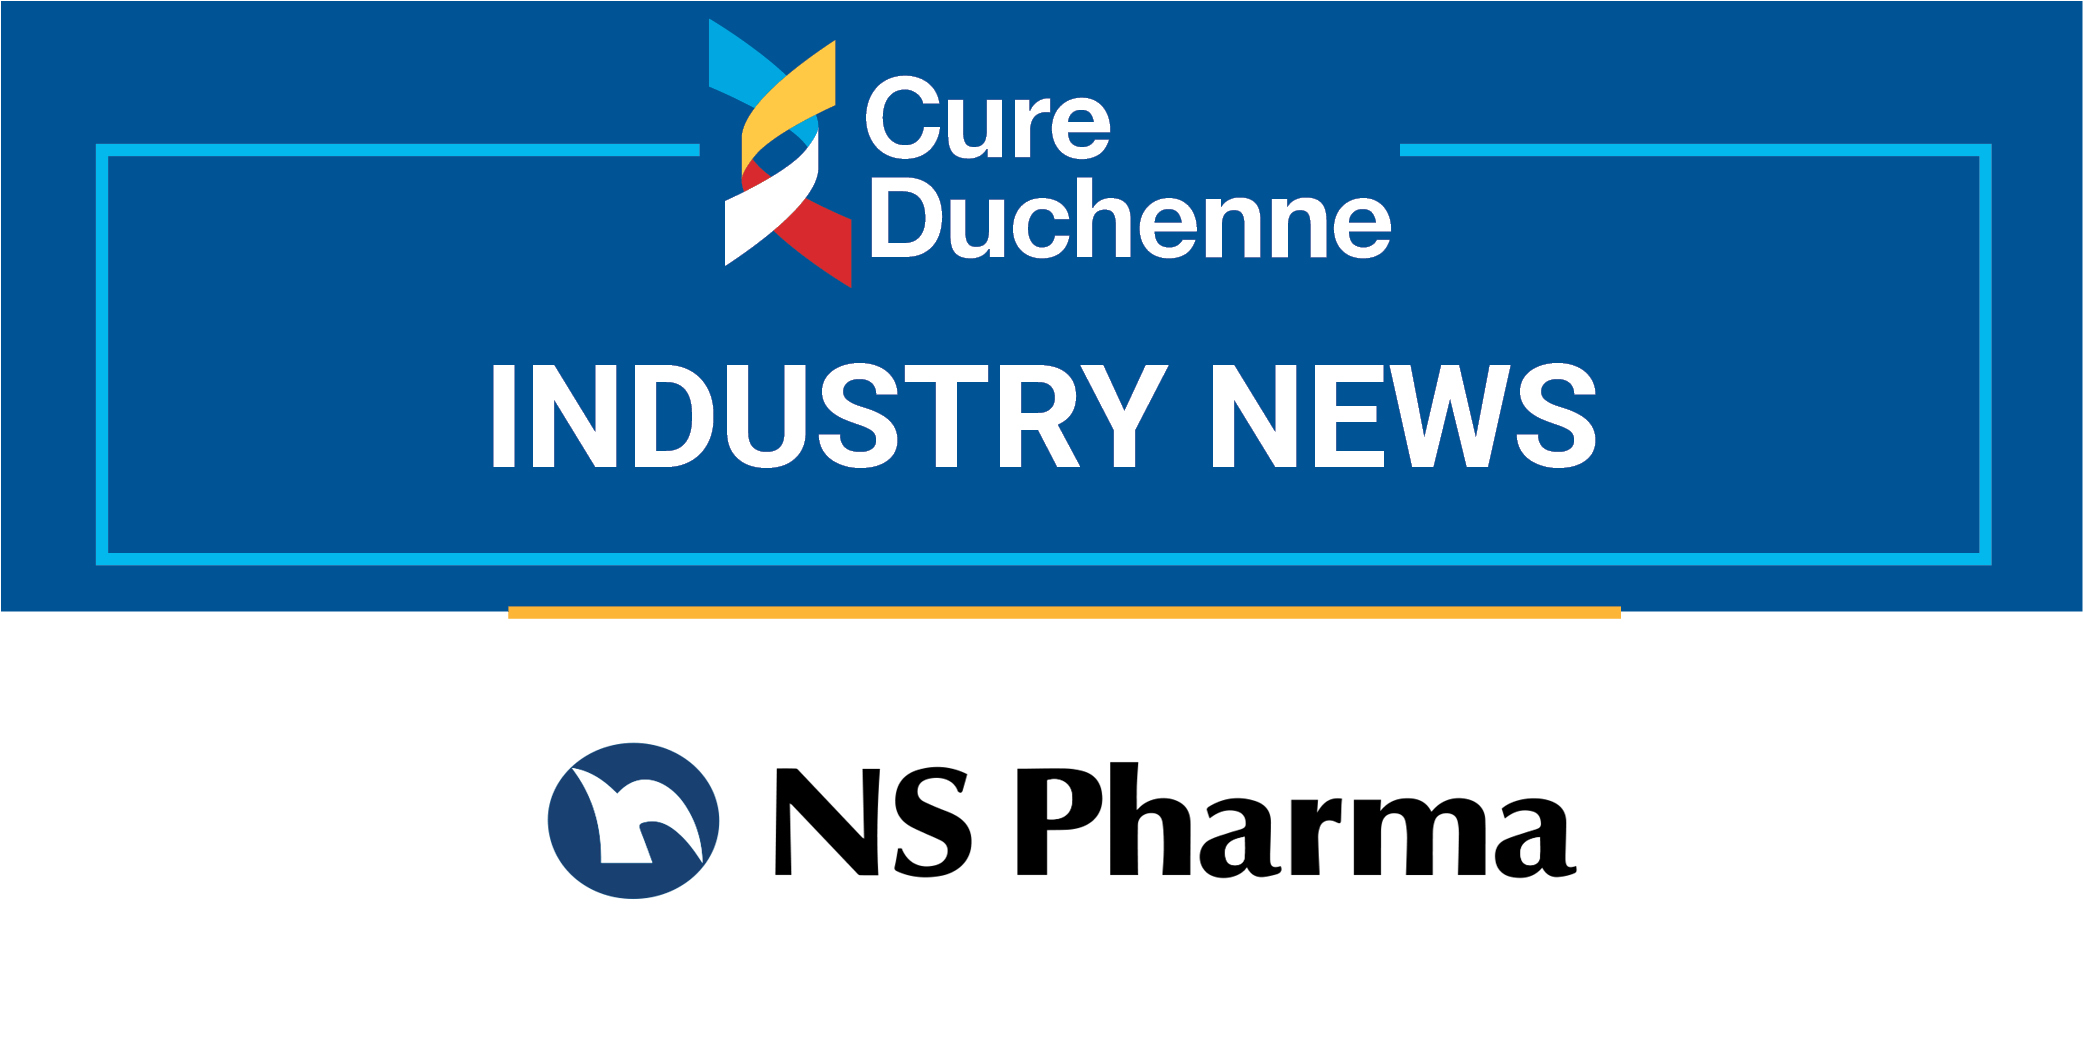 news-header-image-ns-pharma